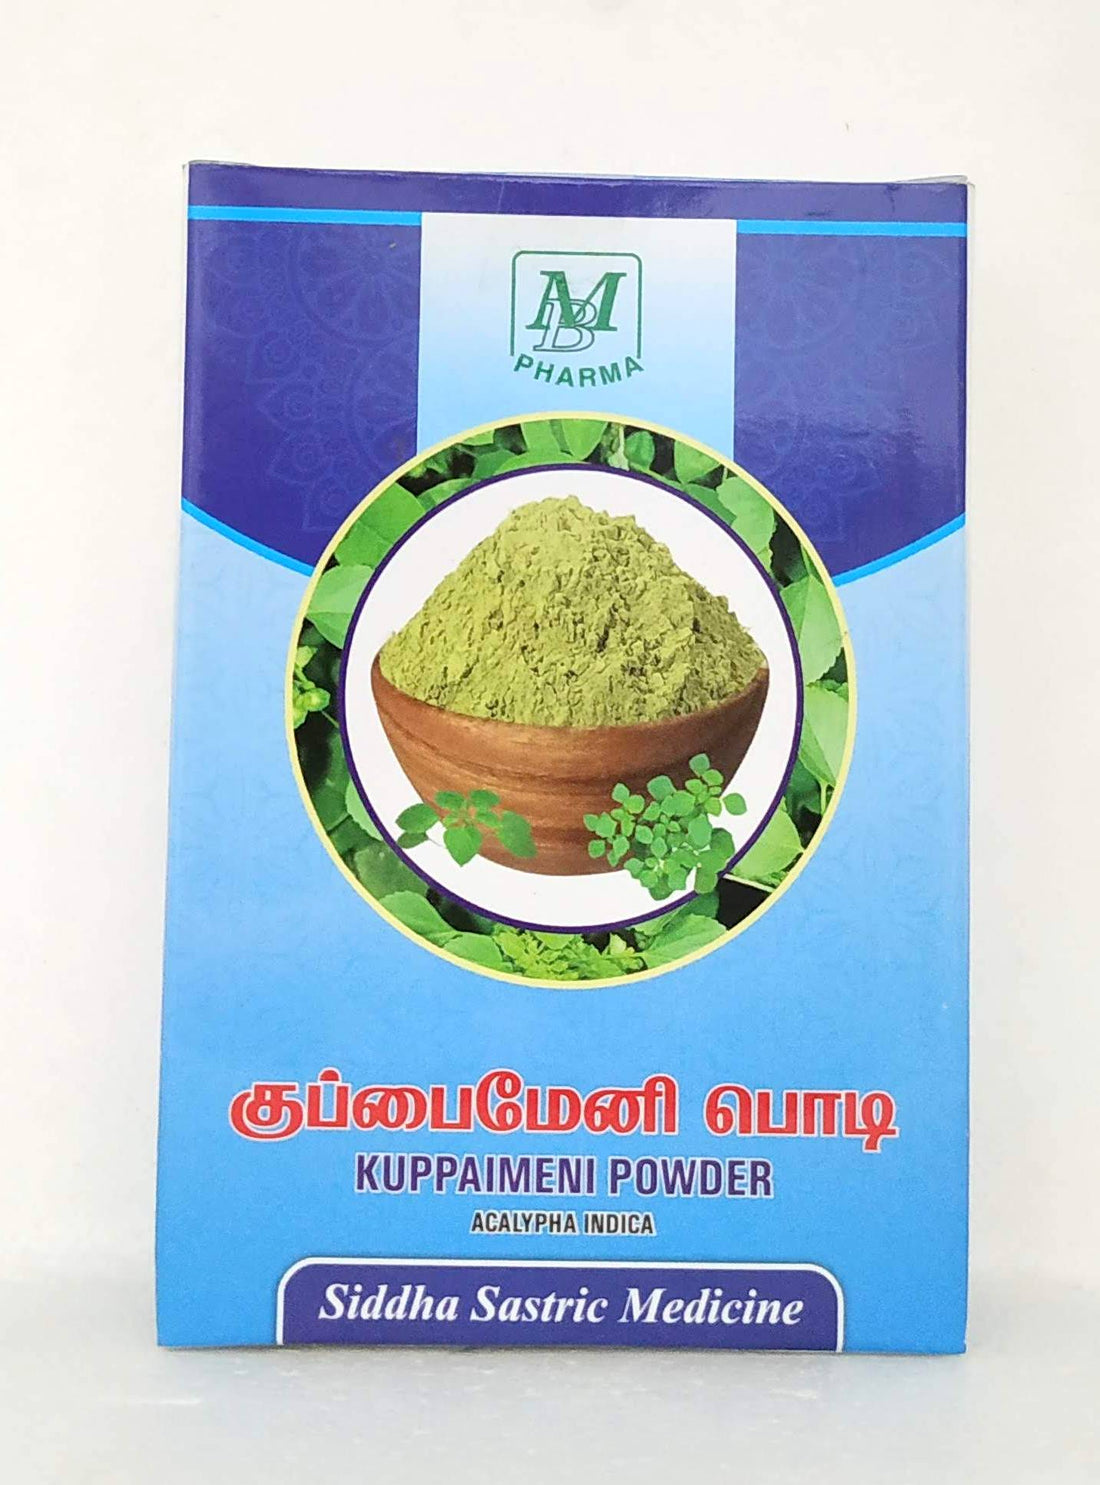 Shop Kuppaimeni powder 50gm at price 36.00 from MB Pharma Online - Ayush Care